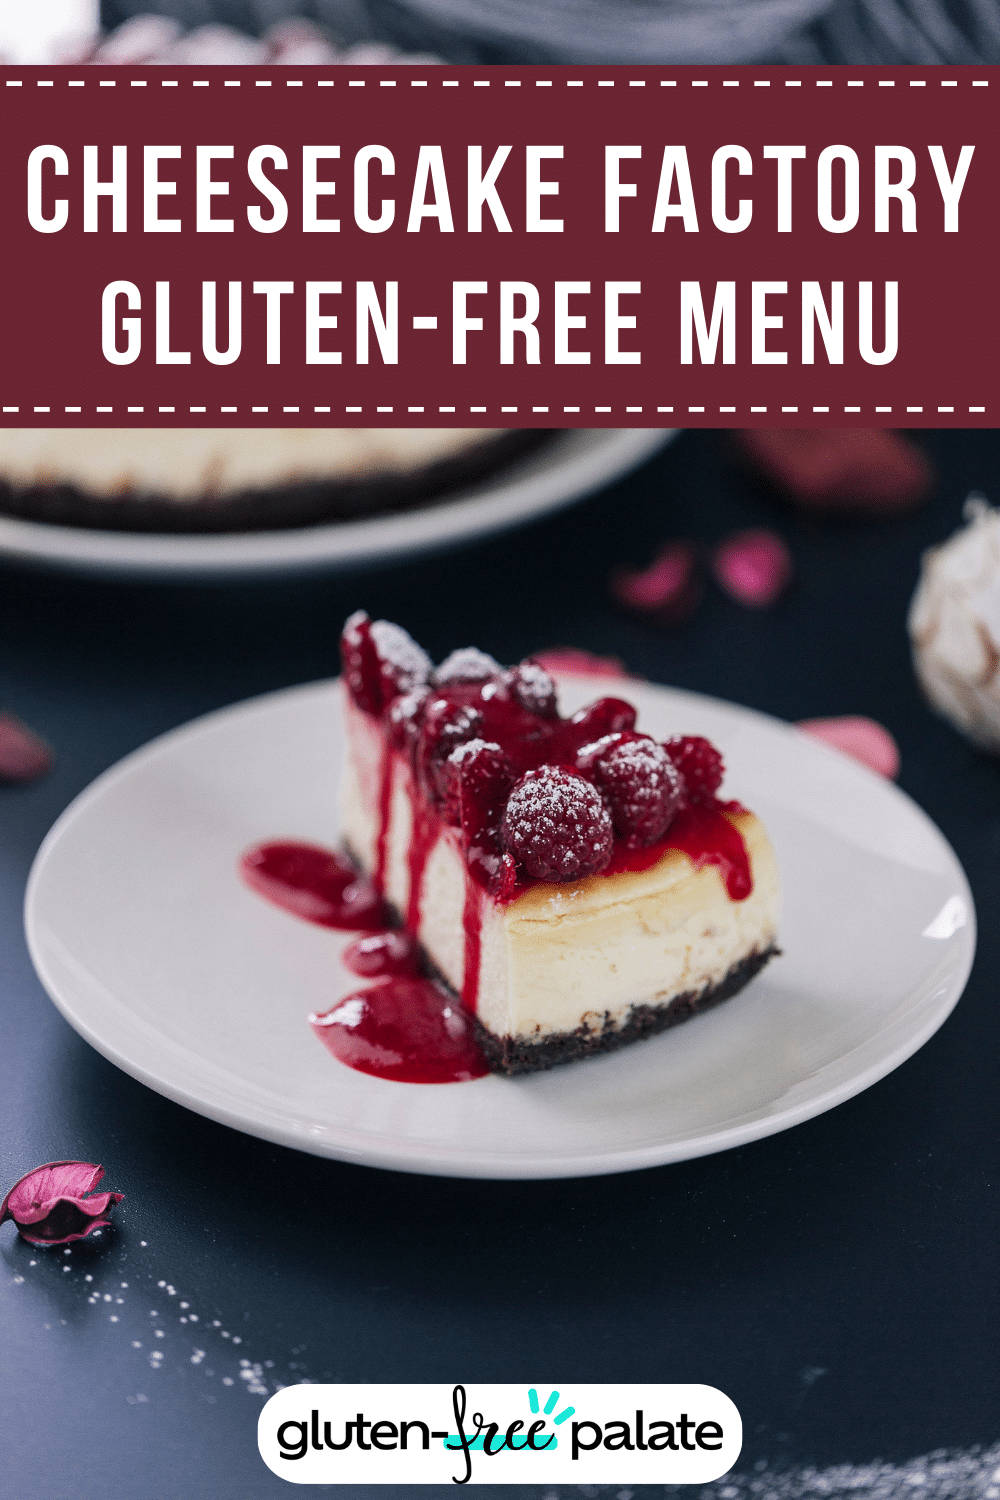 Cheesecake factory gluten-free menu pinterest pin.